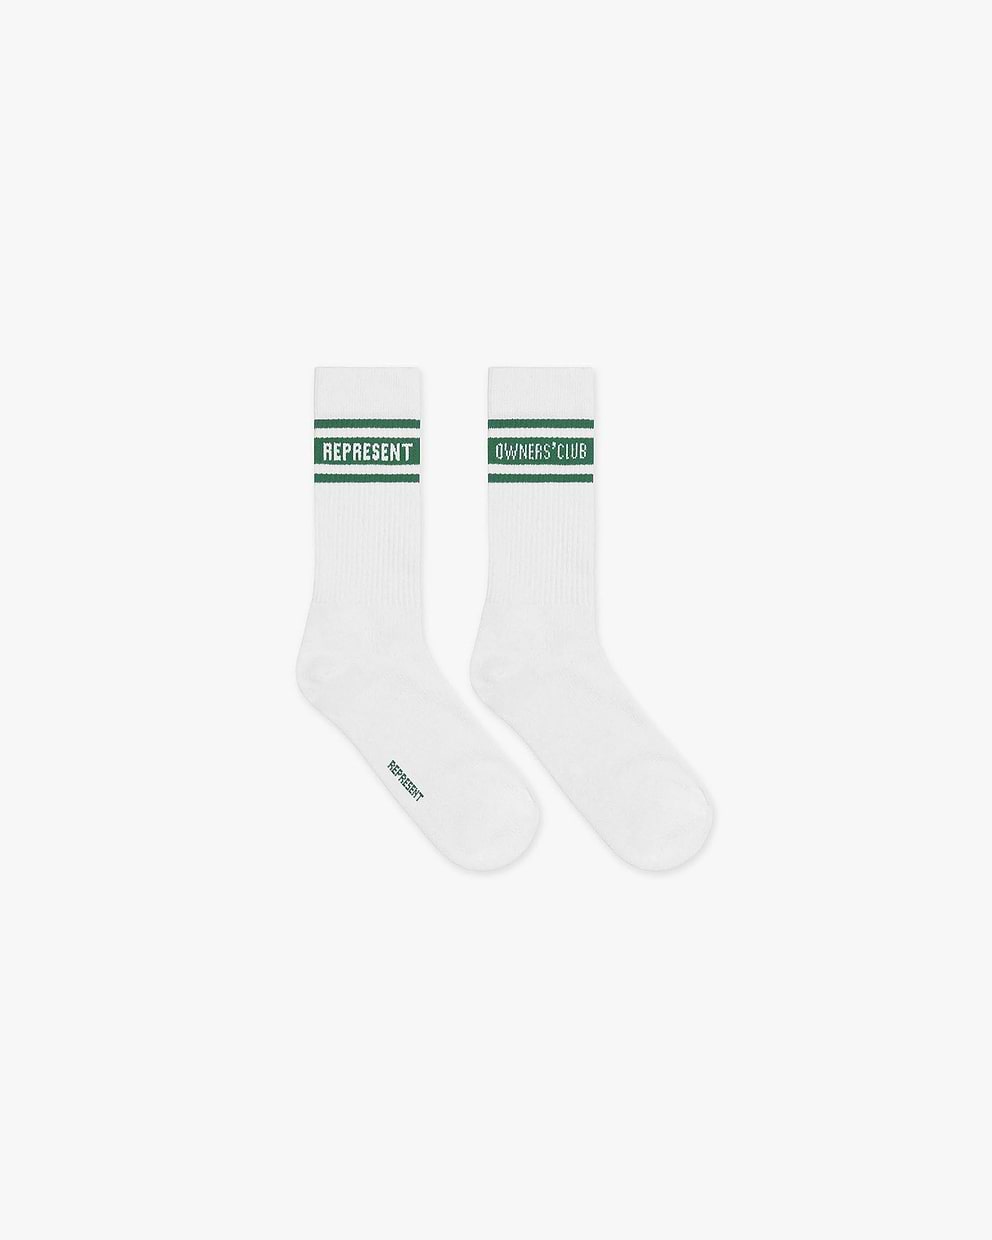 Represent Owners Club Socks - Flat White Racing Green